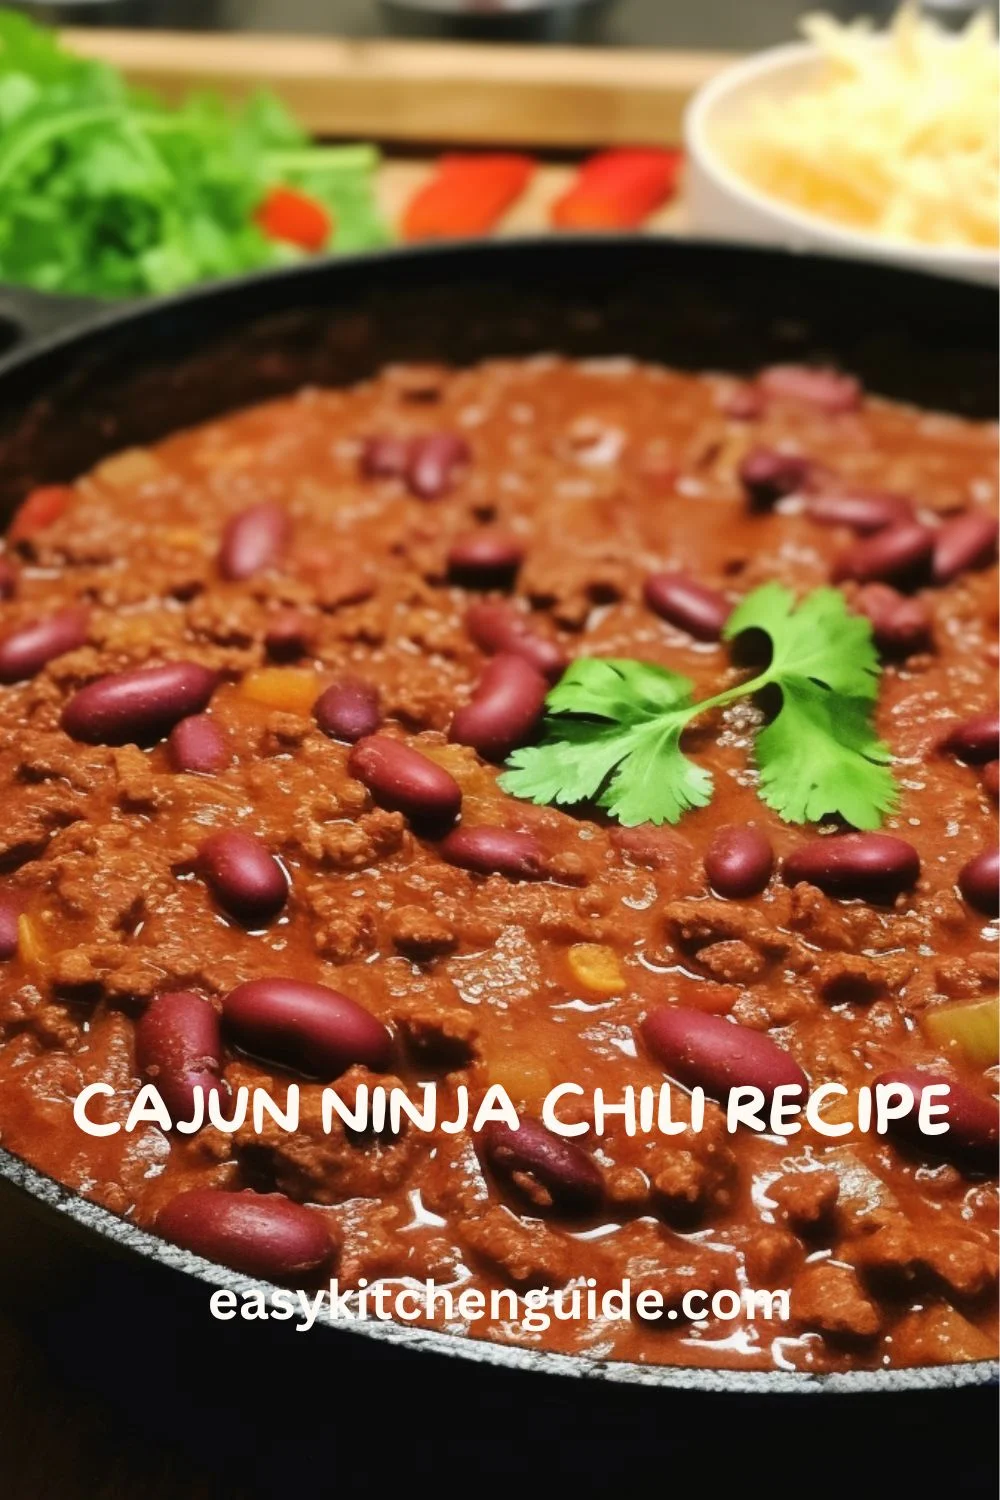 Cajun Ninja Chili Recipe